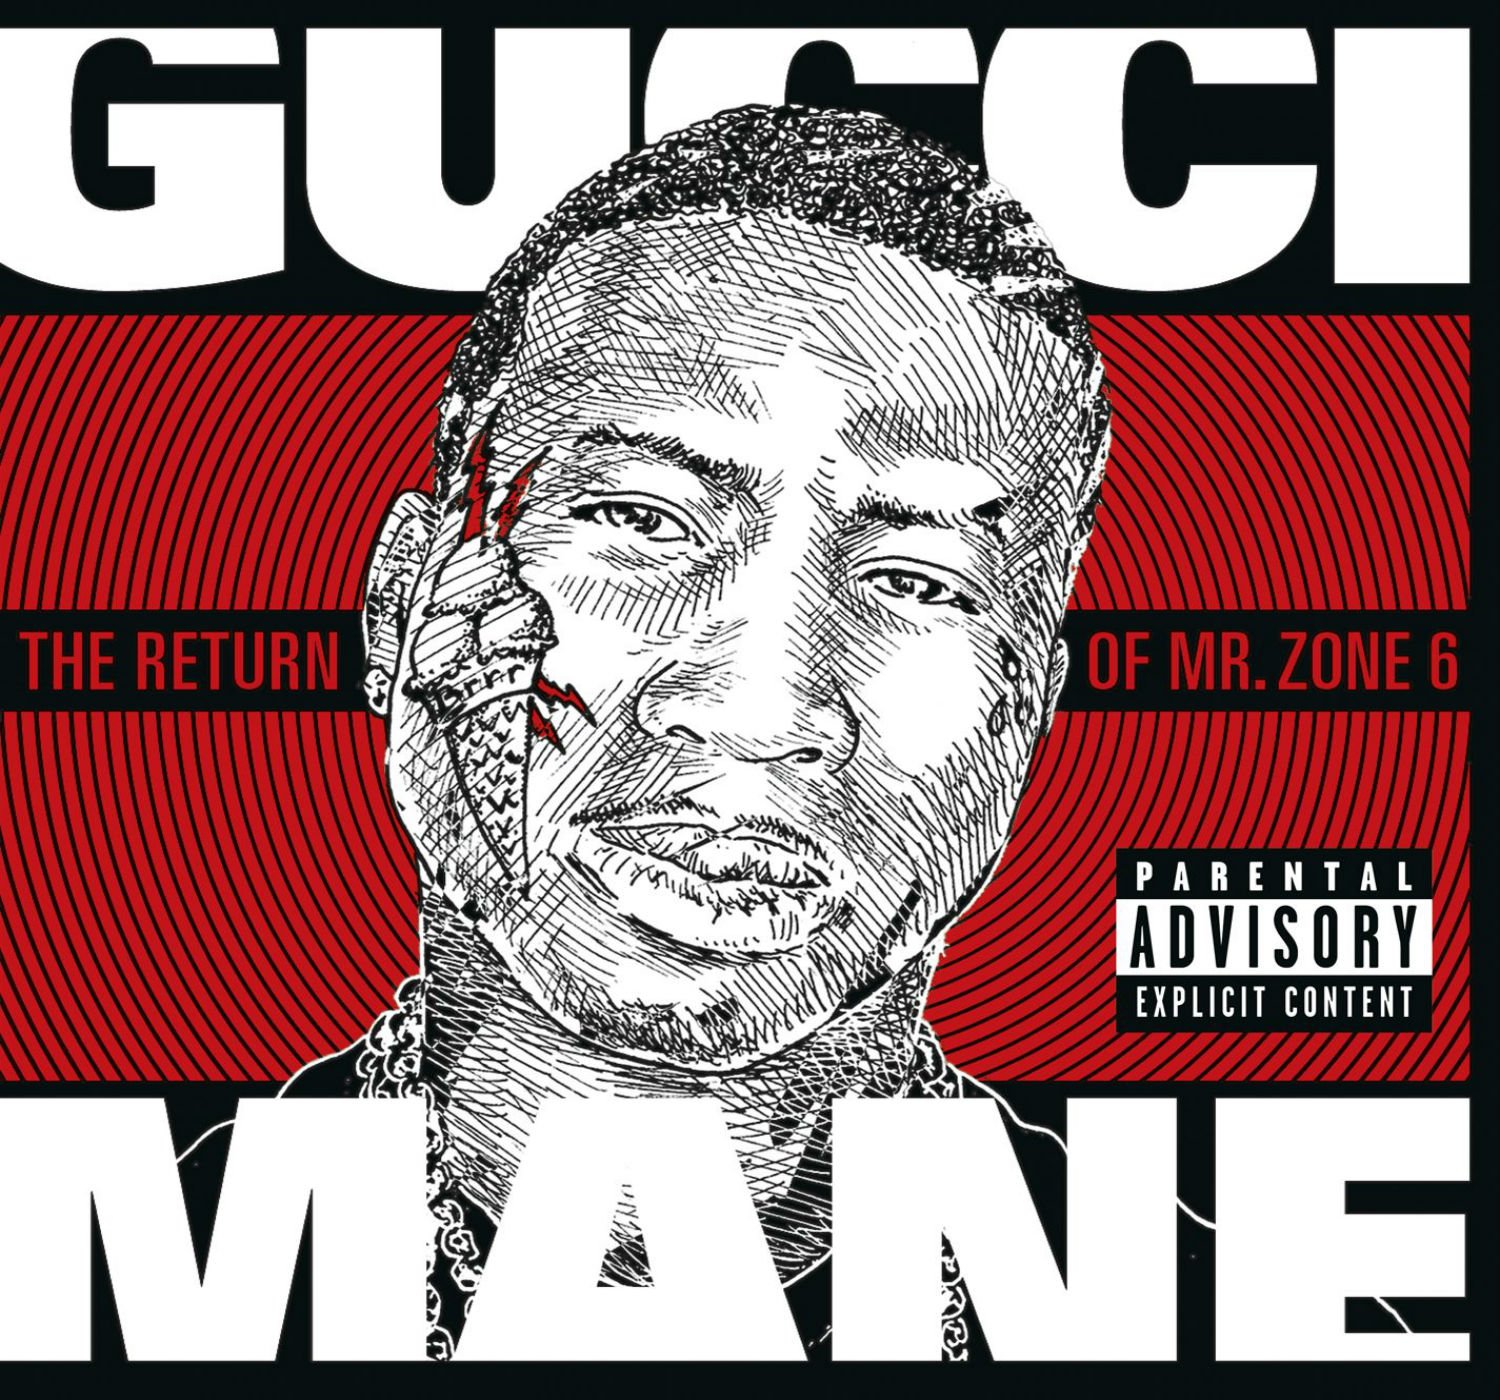 Gucci Mane Southern Gangsta Rap Rapper Hip Hop Poster Wallpaper